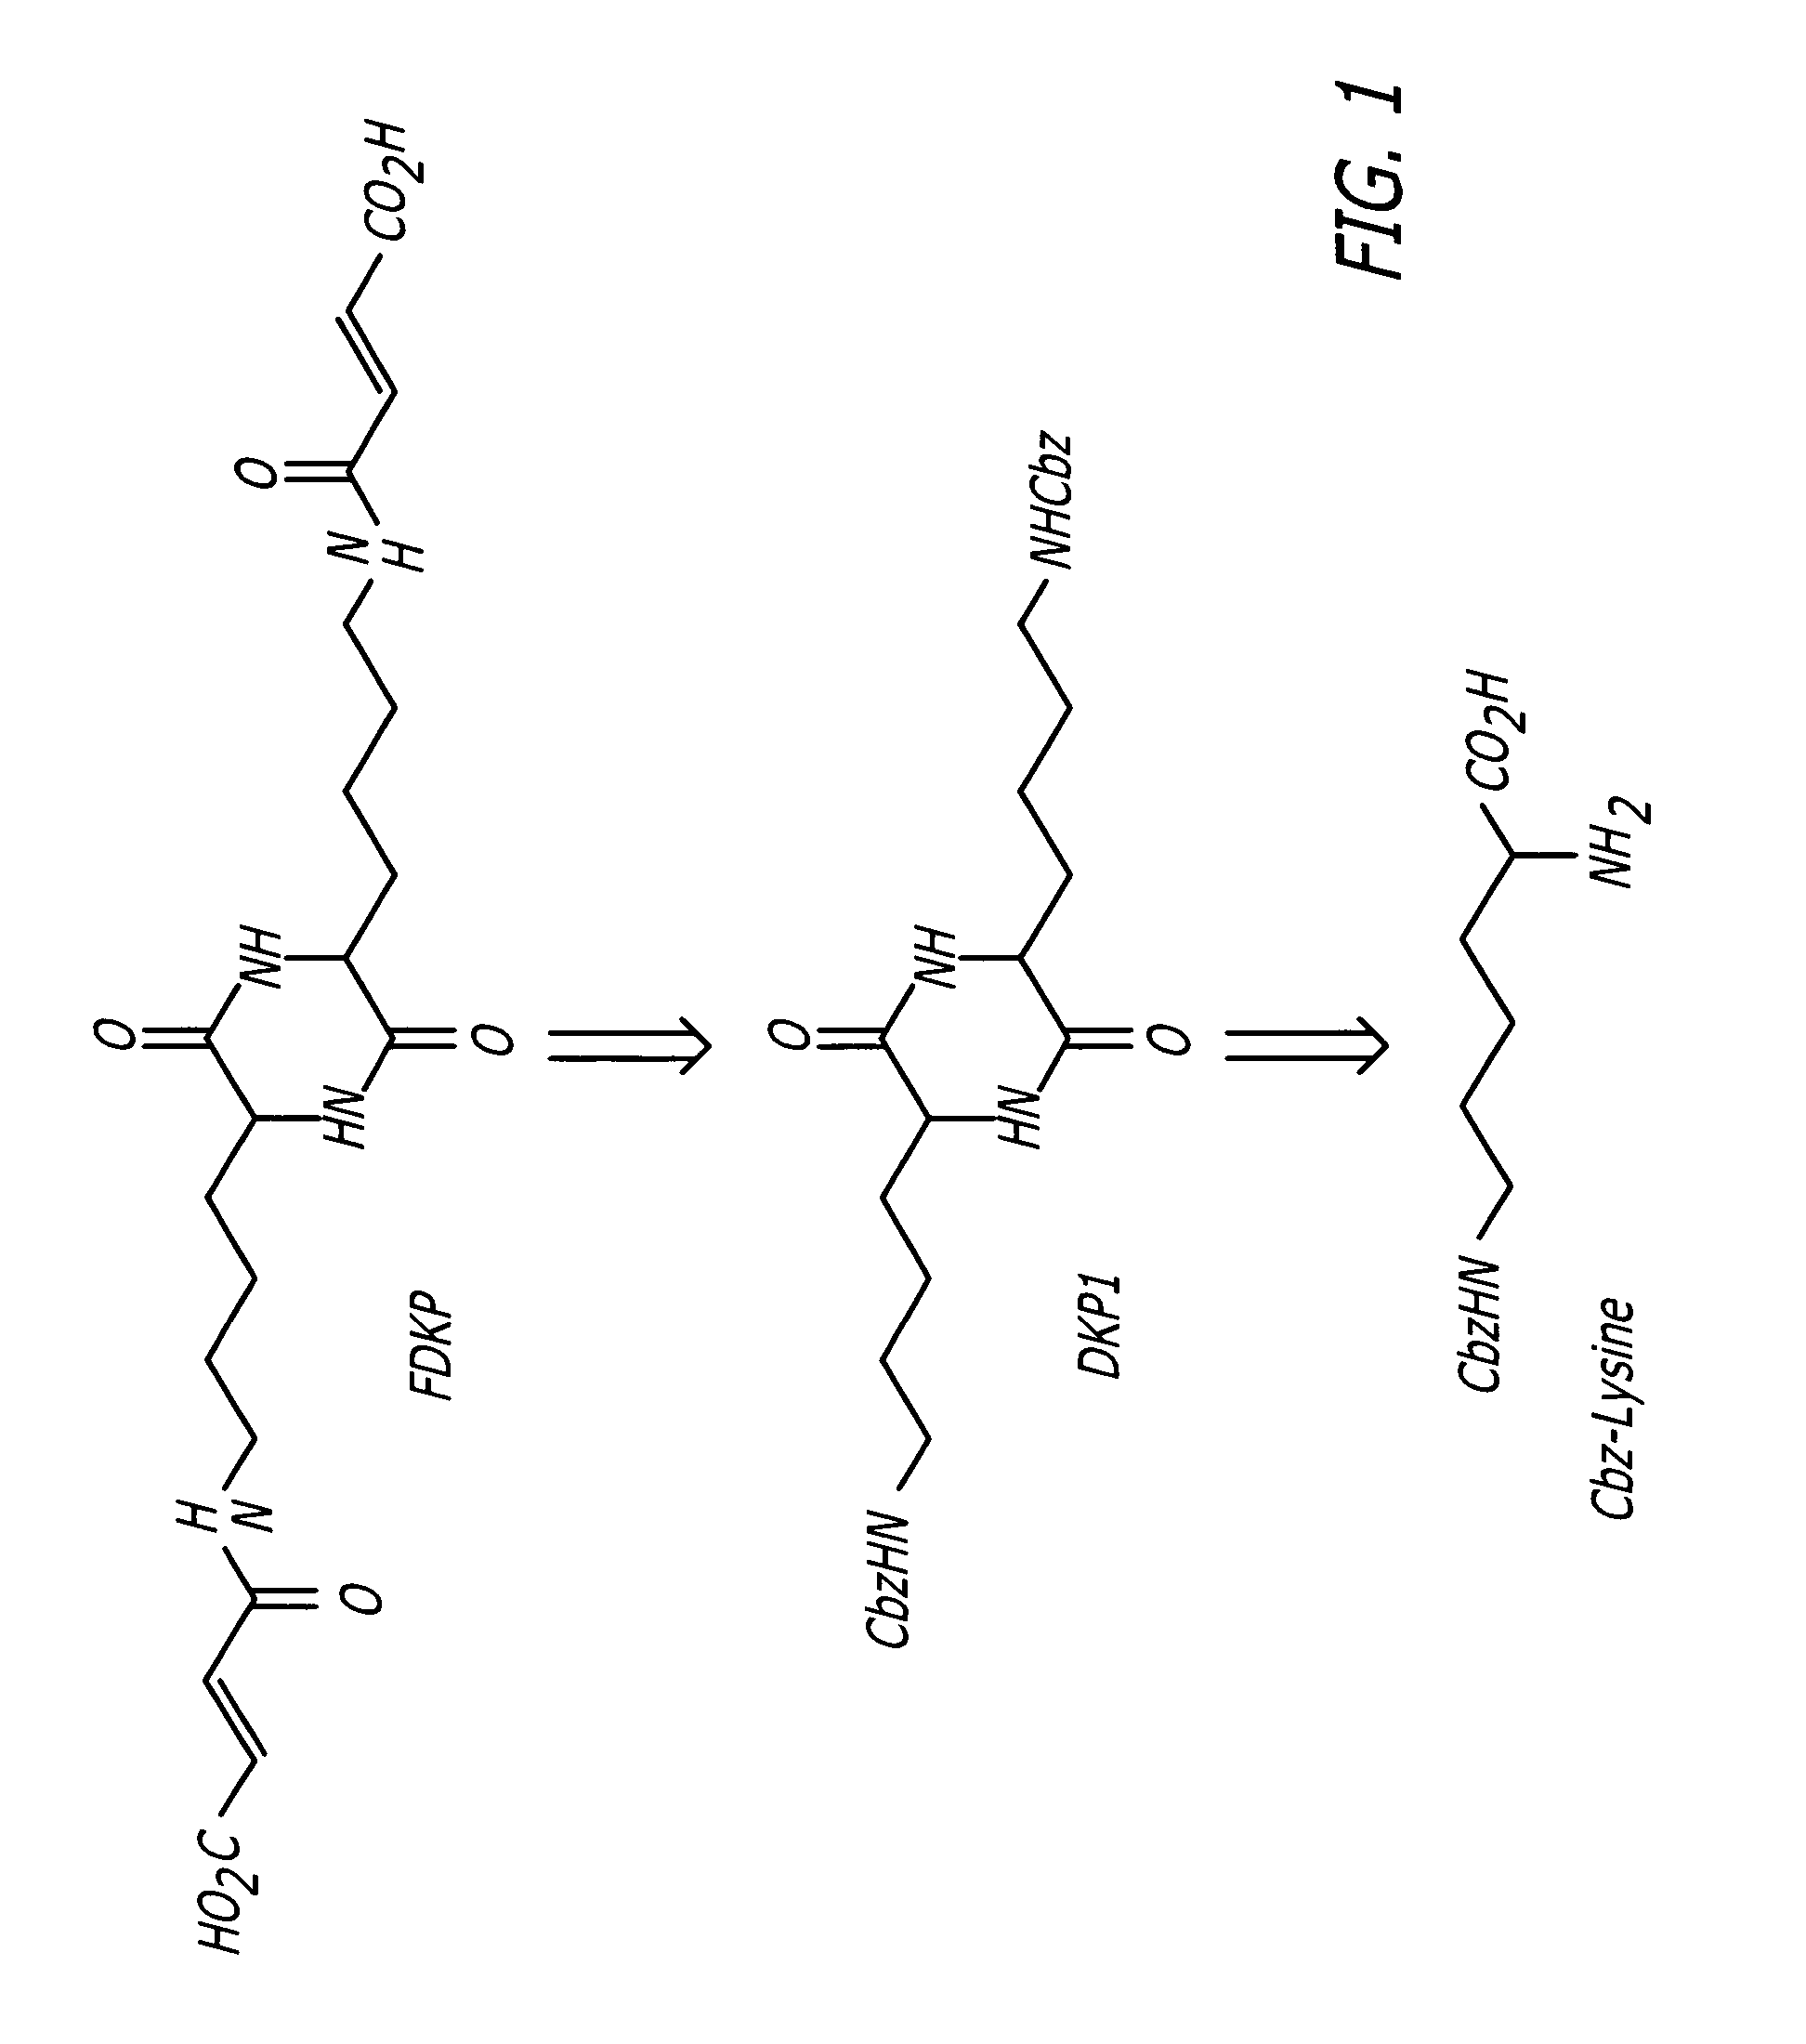 Catalysis of diketopiperazine synthesis